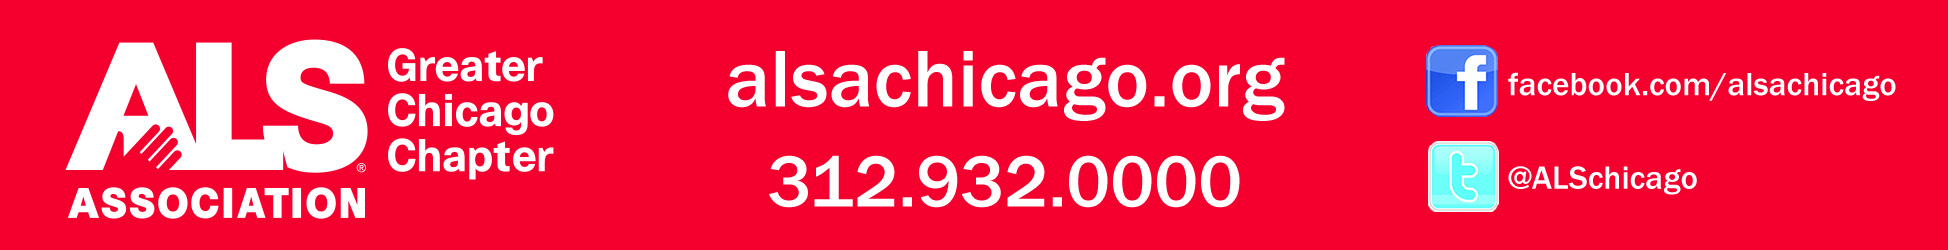 alsa-chicago-red-horizontal-bar-w-social-media.jpg